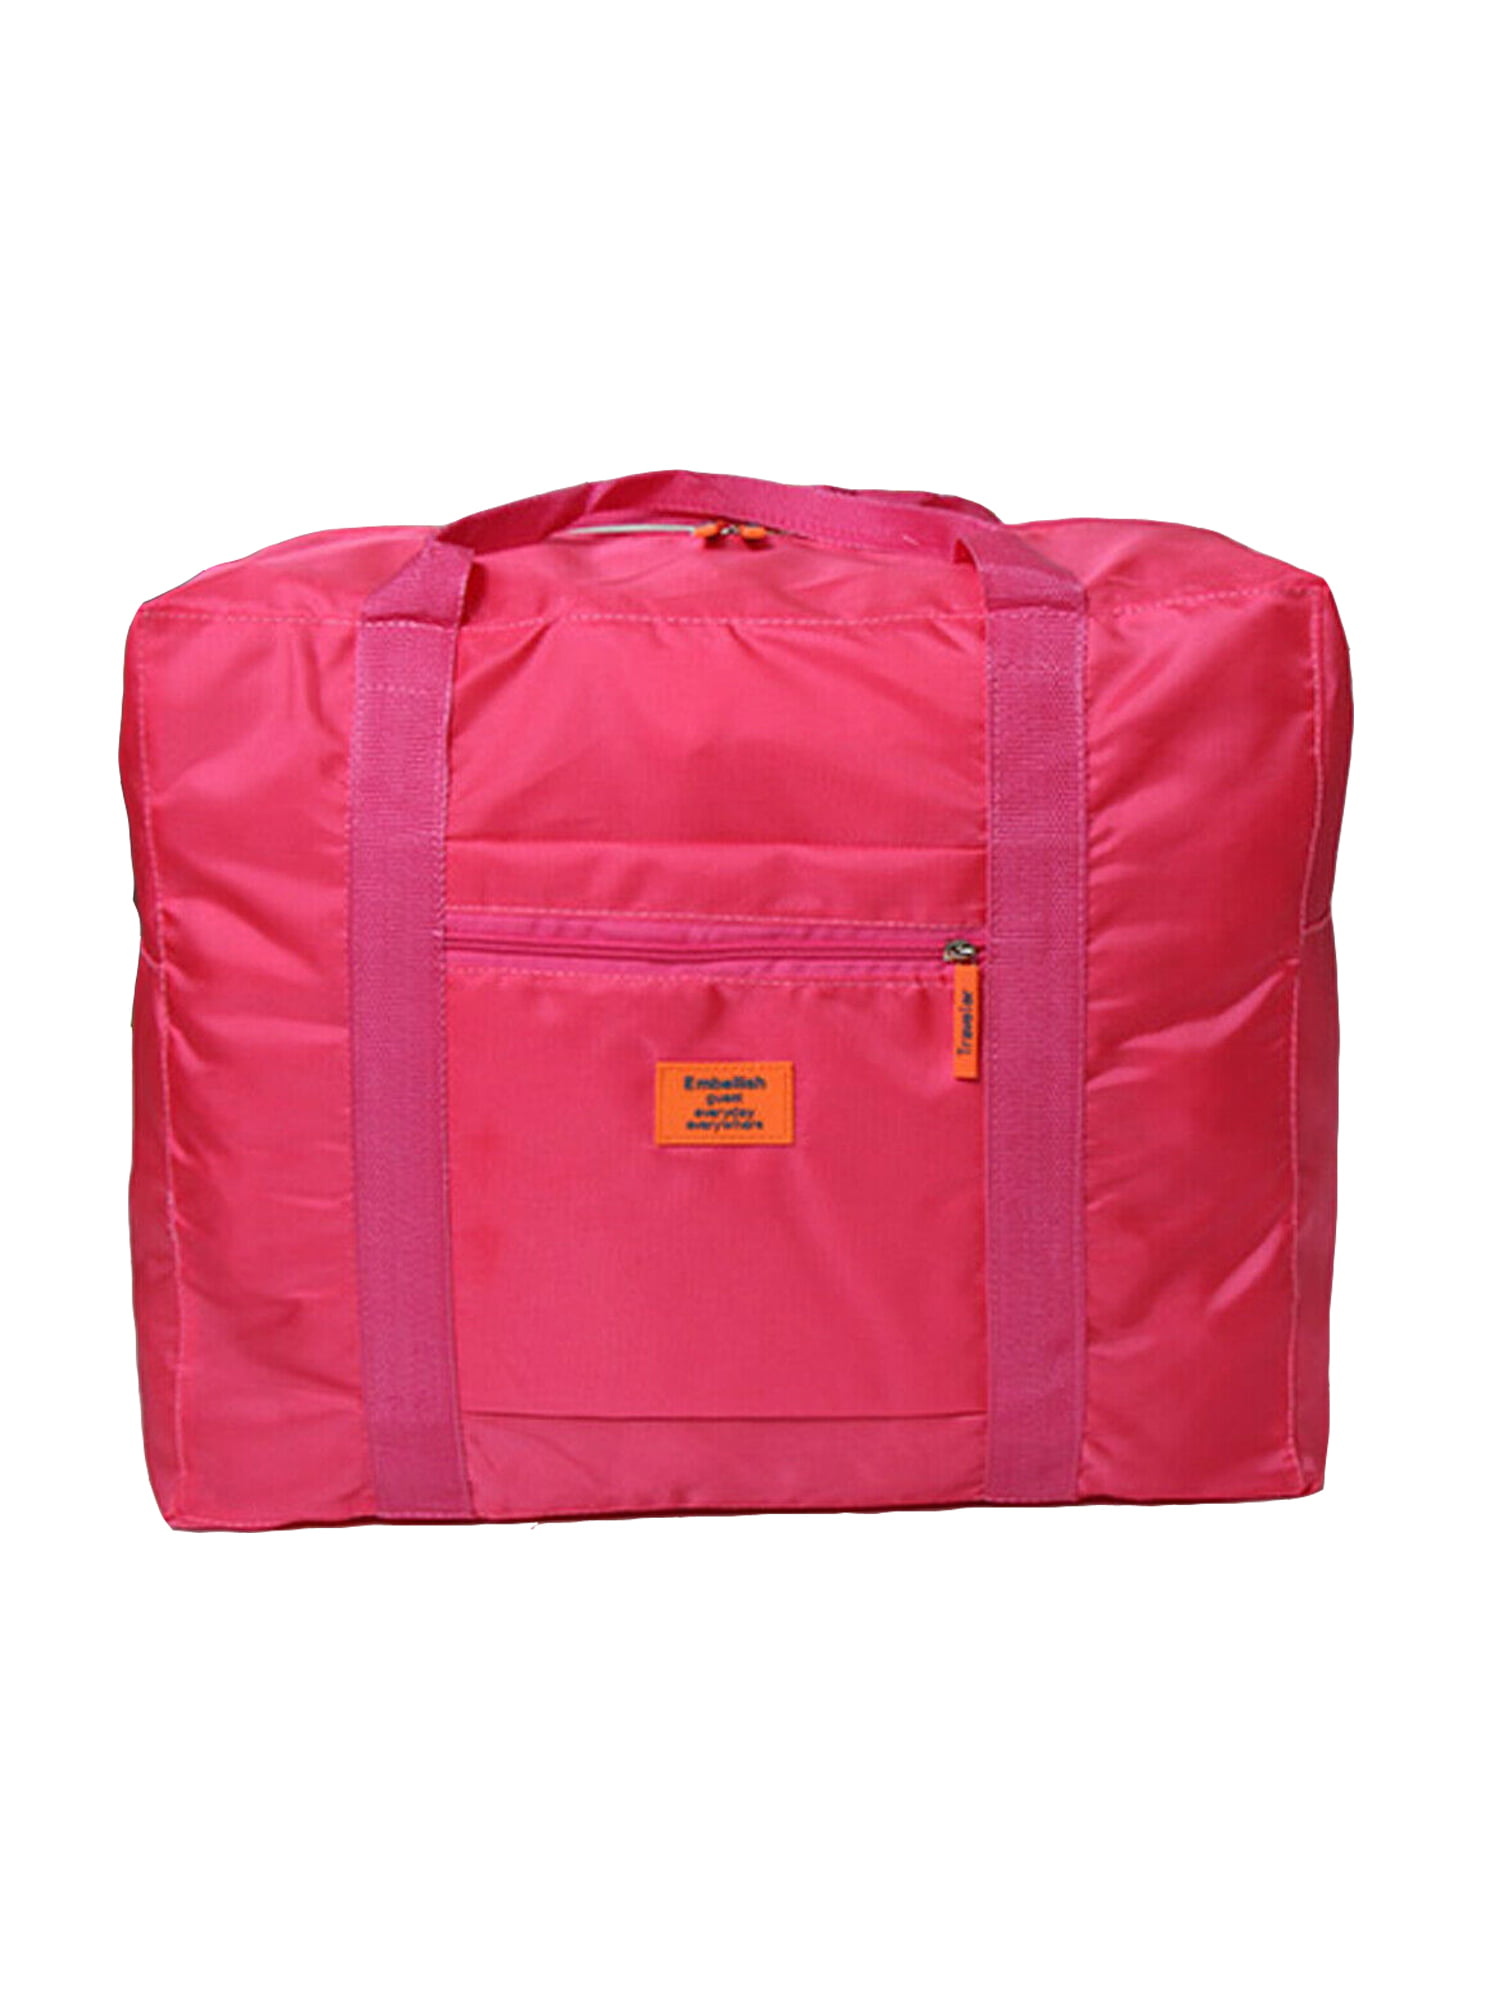 woshilaocai Foldable Large Duffel Bag - www.bagsaleusa.com - www.bagsaleusa.com